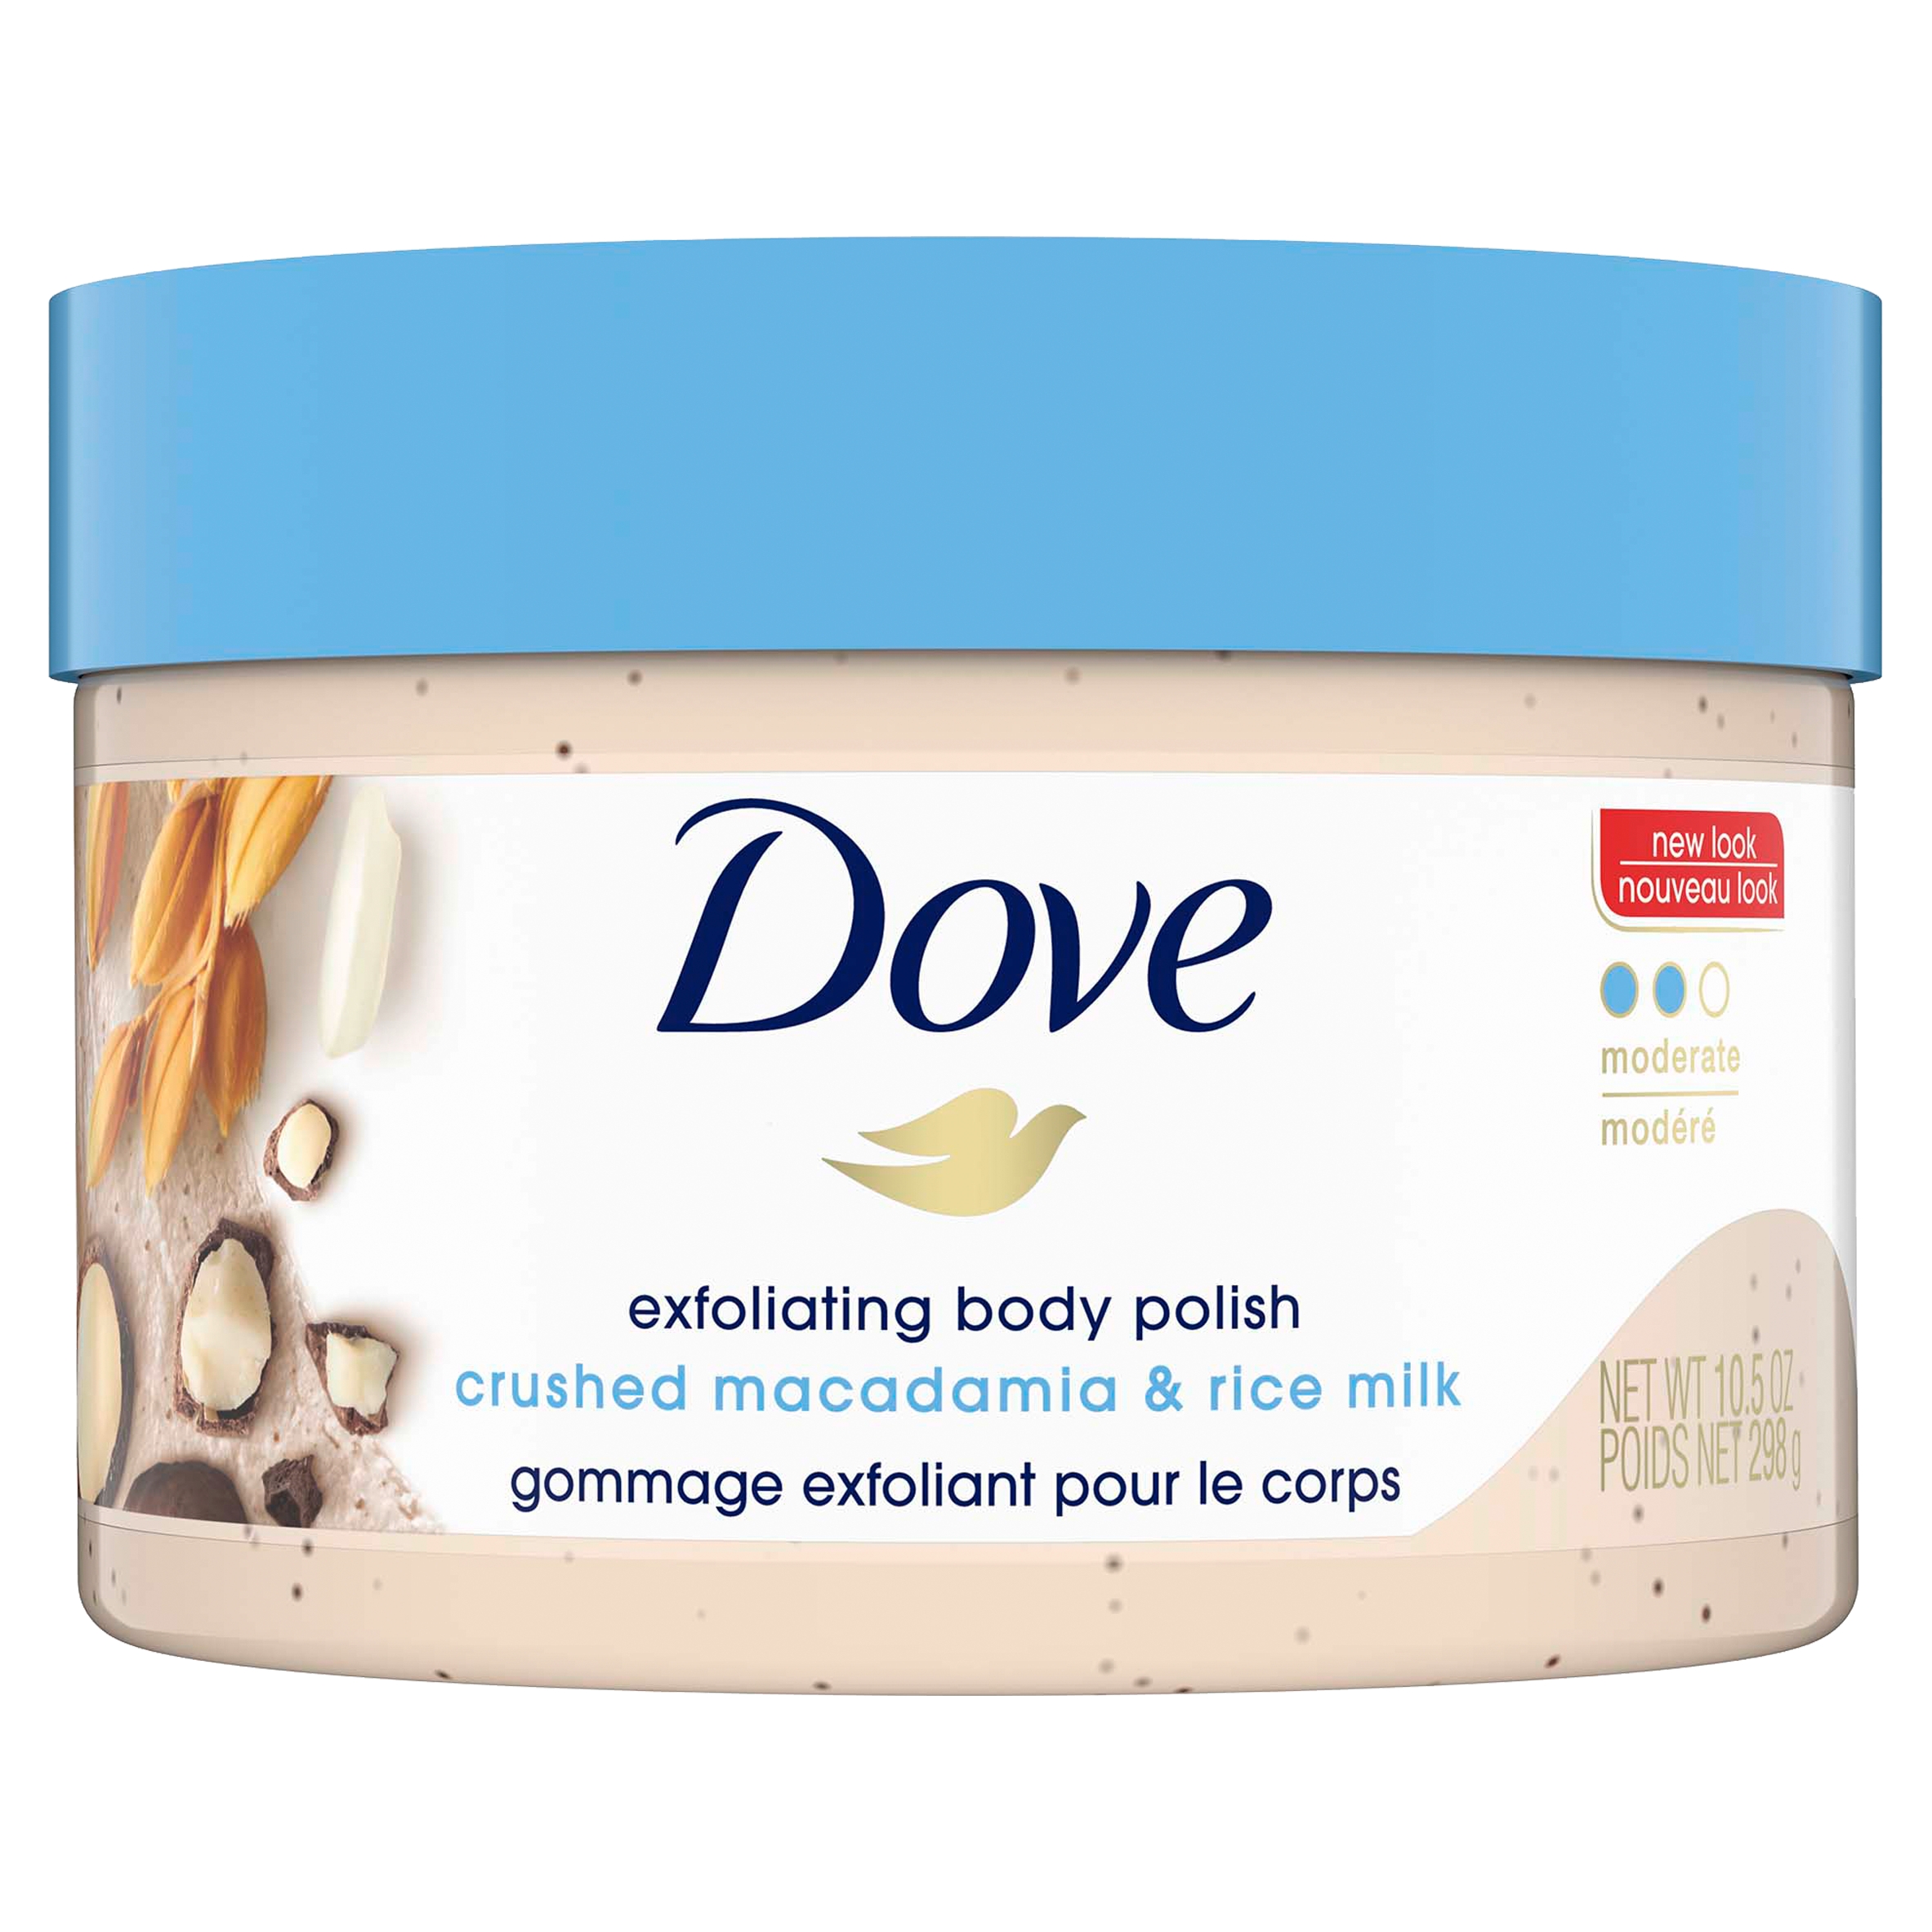 Dove exfoliating body polish walmart